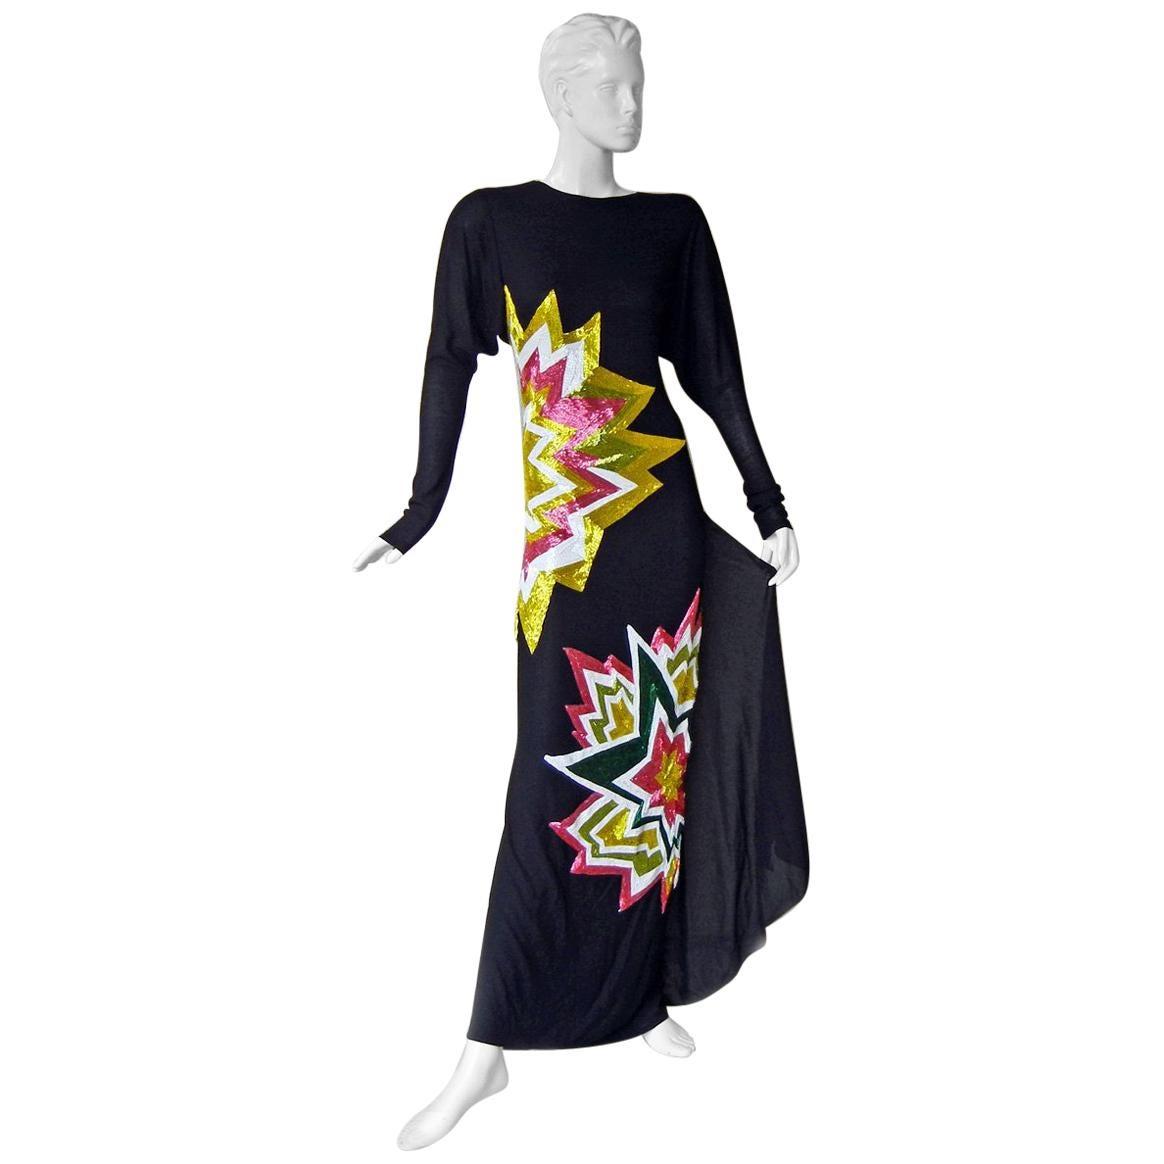 Tom Ford Lichtenstein-esque Ka-Pow Explosive Appliques Dress Gown  New!